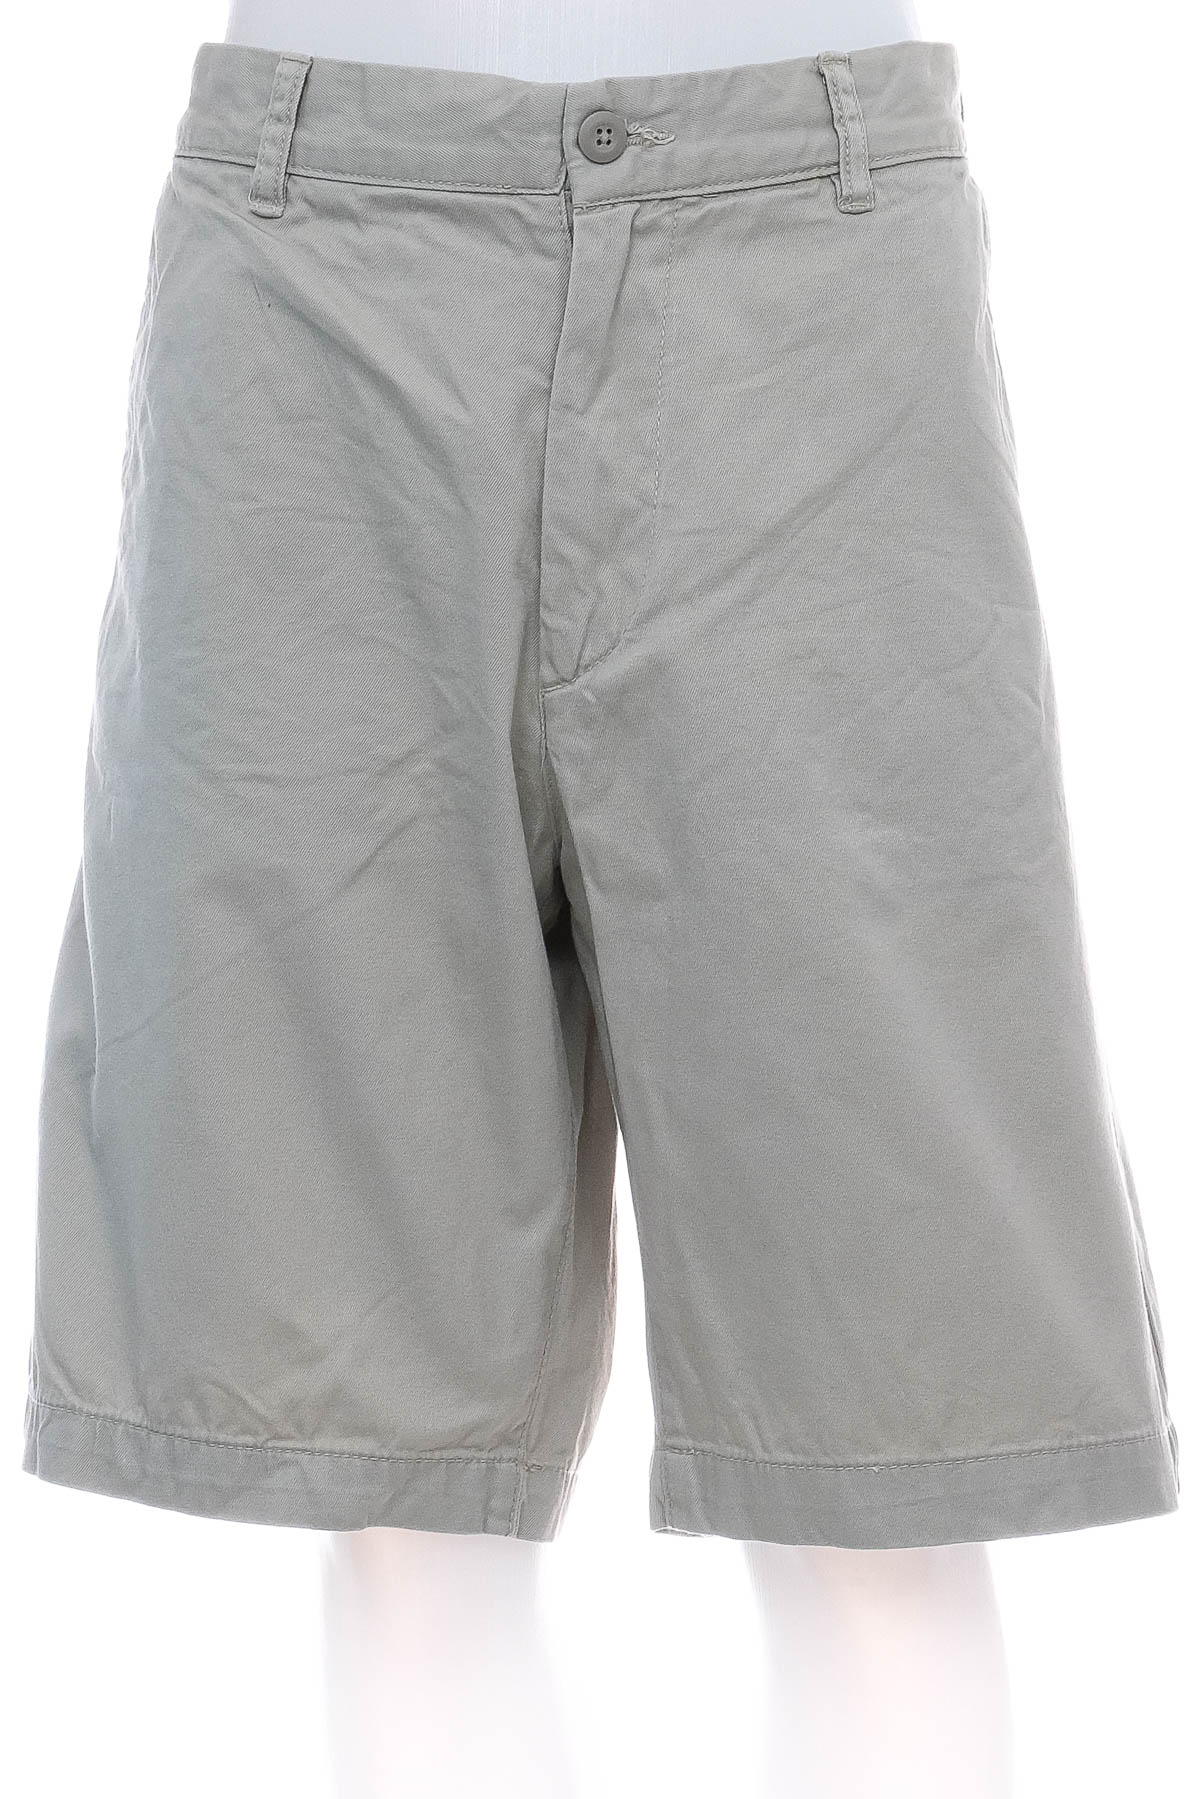 Men's shorts - H&M - 0